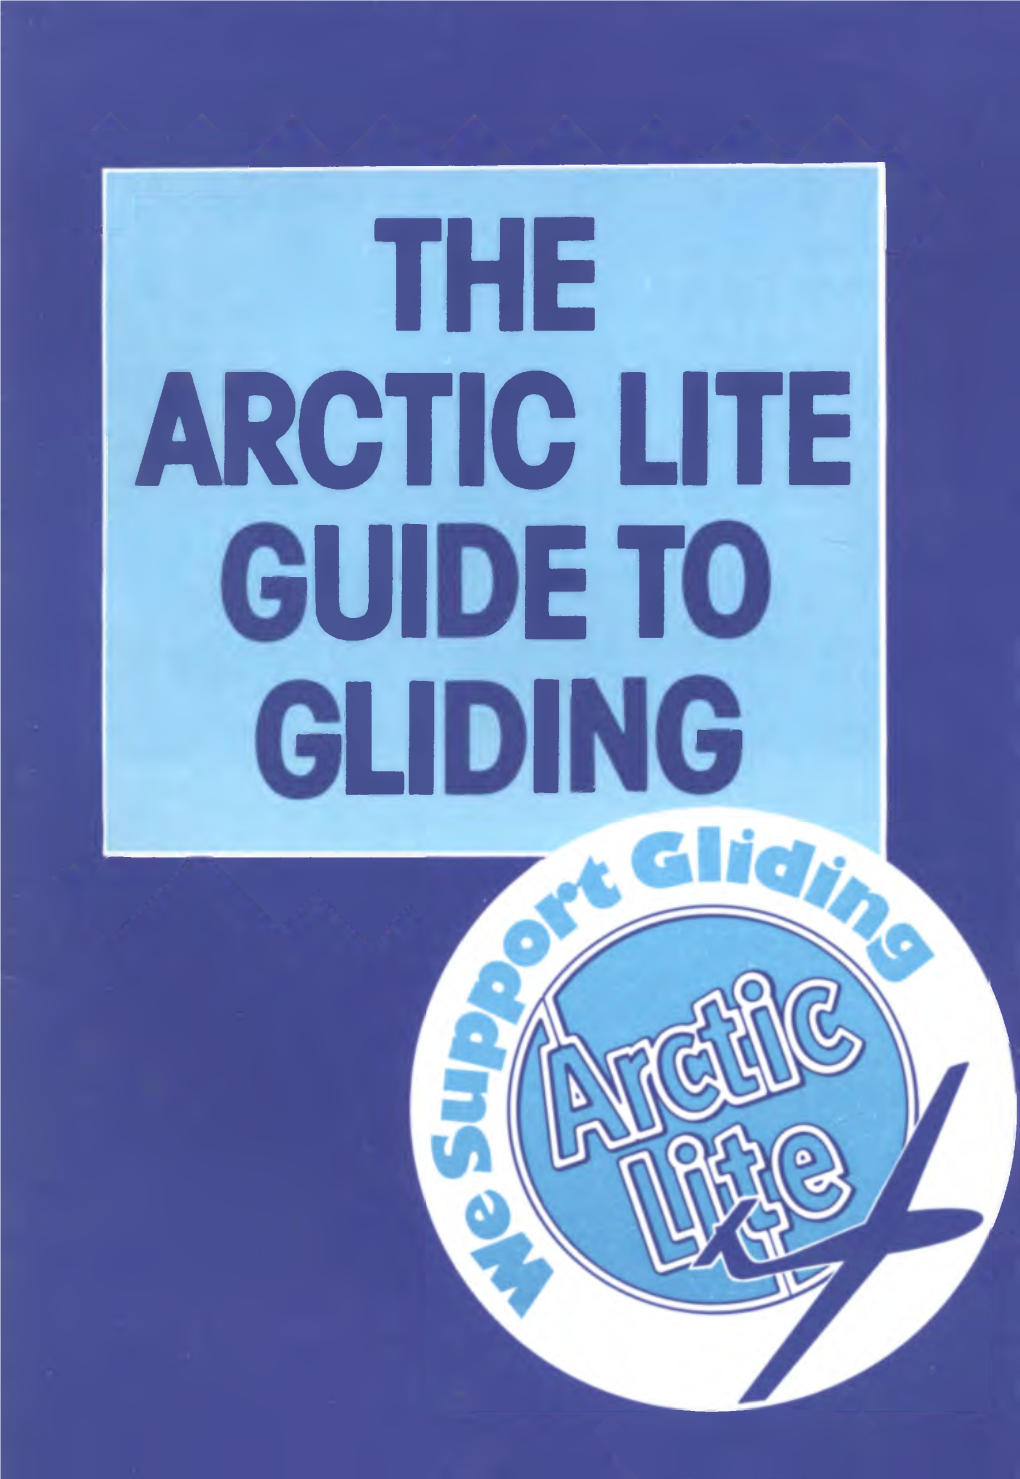 The Arctic Lite Guid